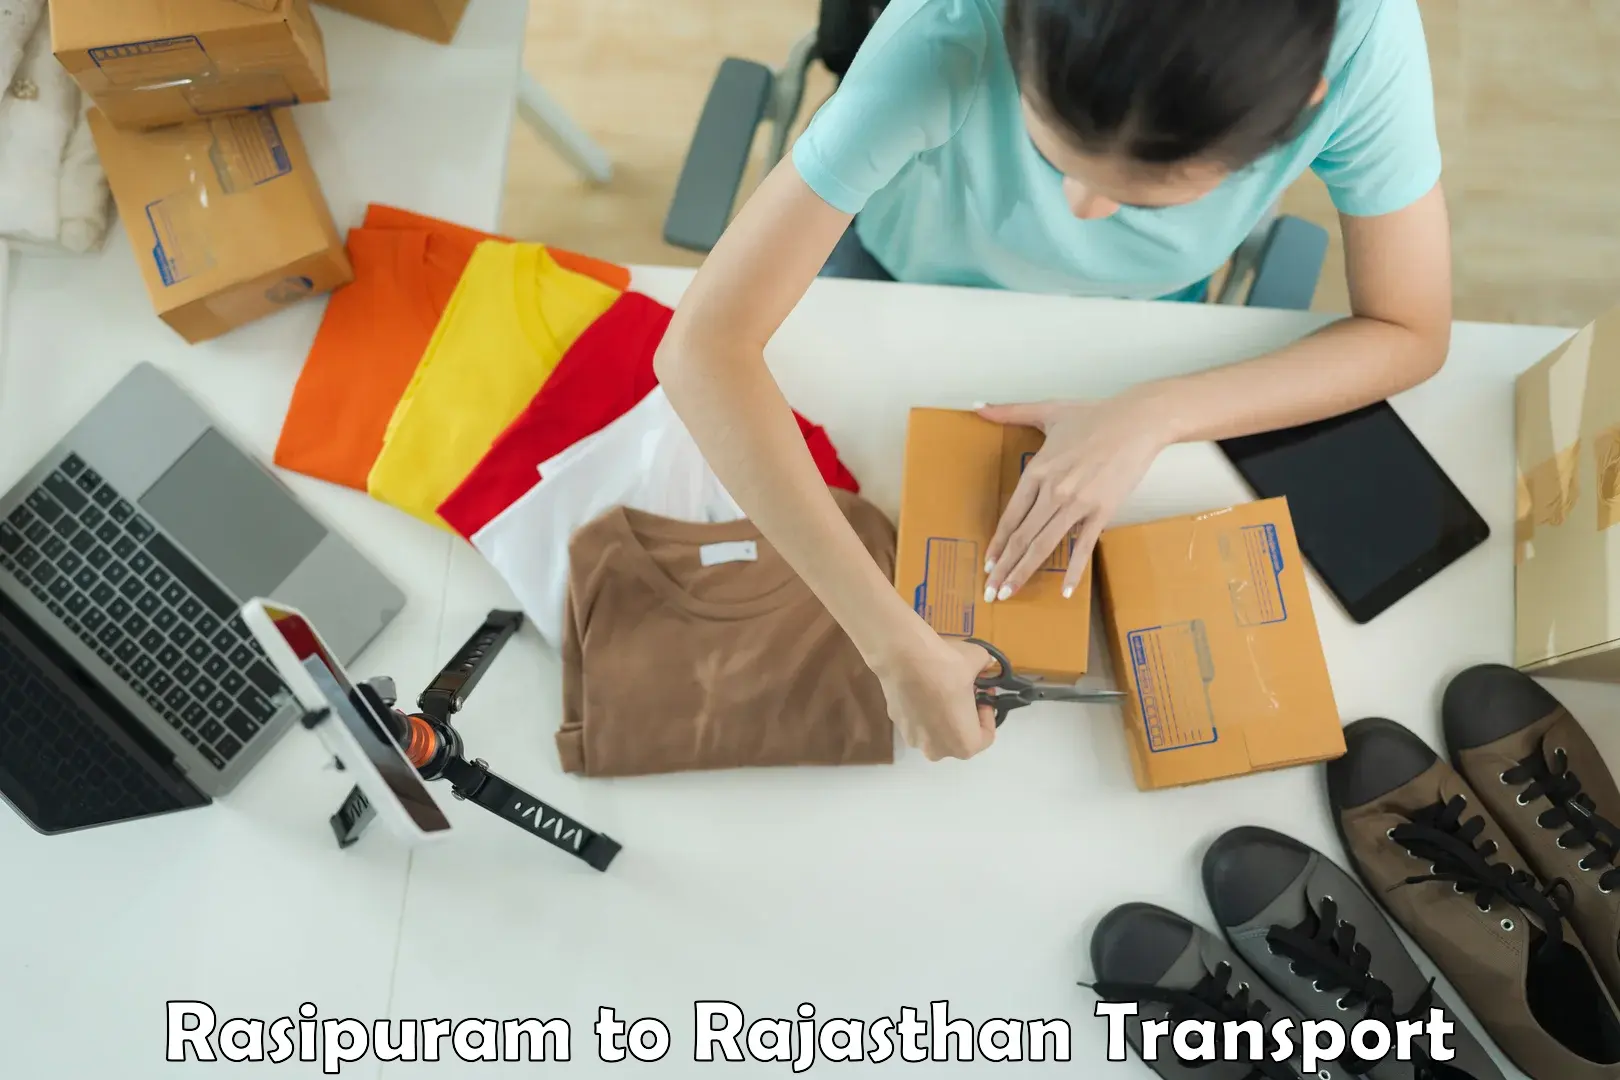 Delivery service Rasipuram to Rajgarh Rajasthan